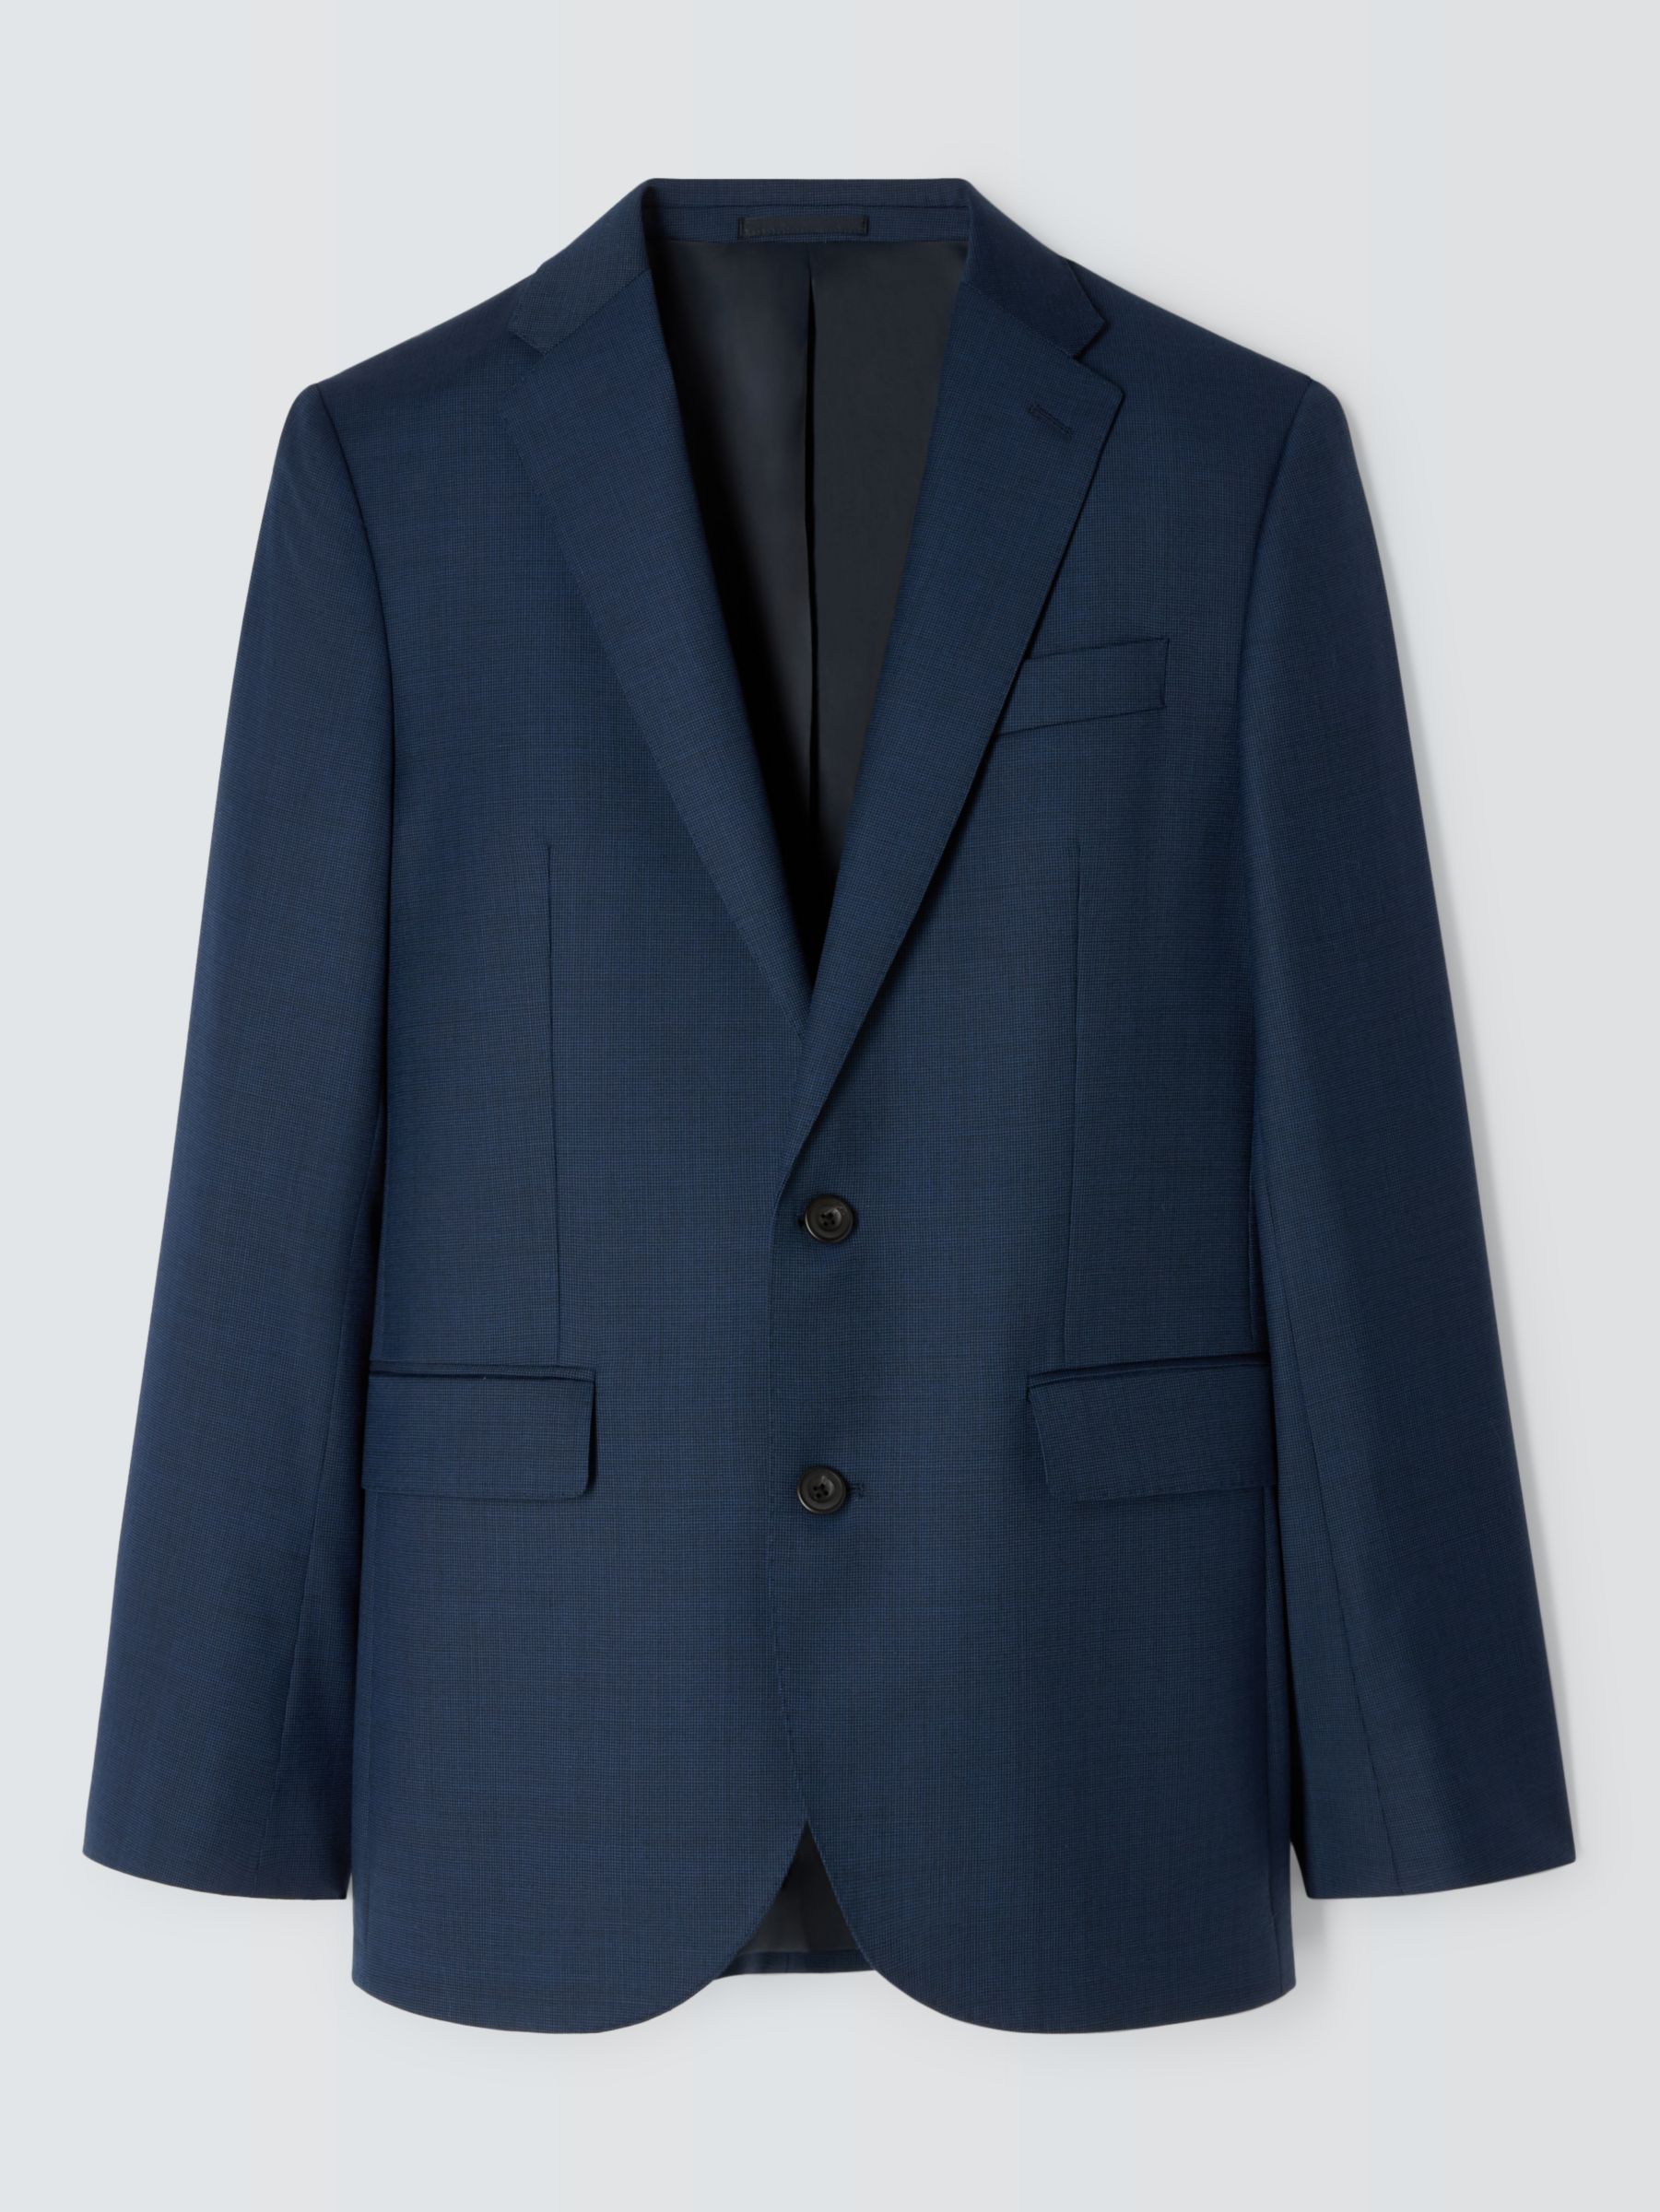 John Lewis Clarendon Regular Fit Wool Suit Jacket, Royal Blue, 38R